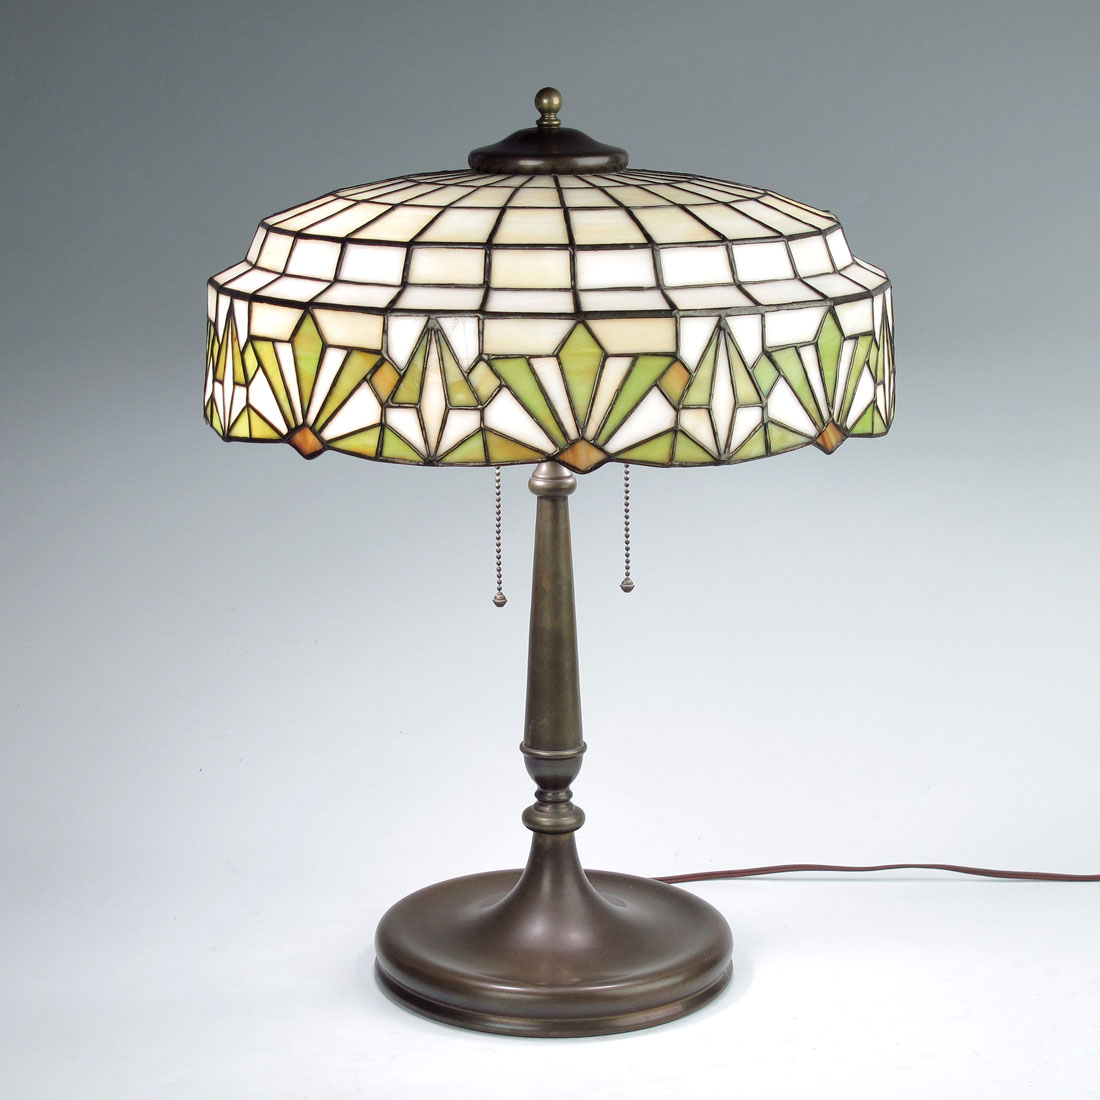 VINTAGE MILLER LEADED GLASS TABLE LAMP: